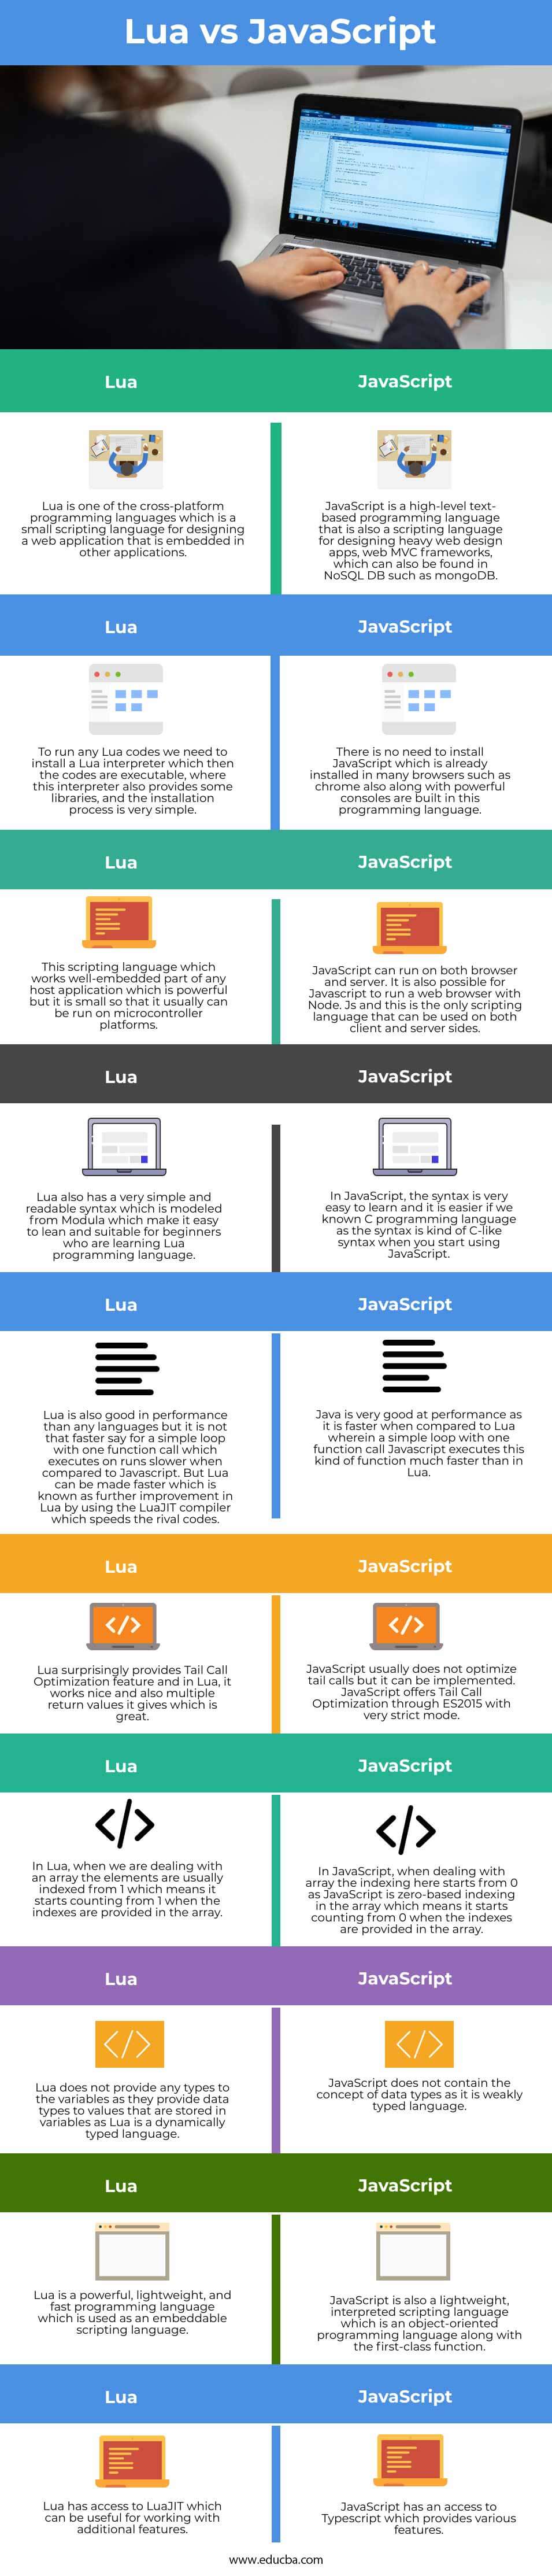 Lua-vs-JavaScript-info